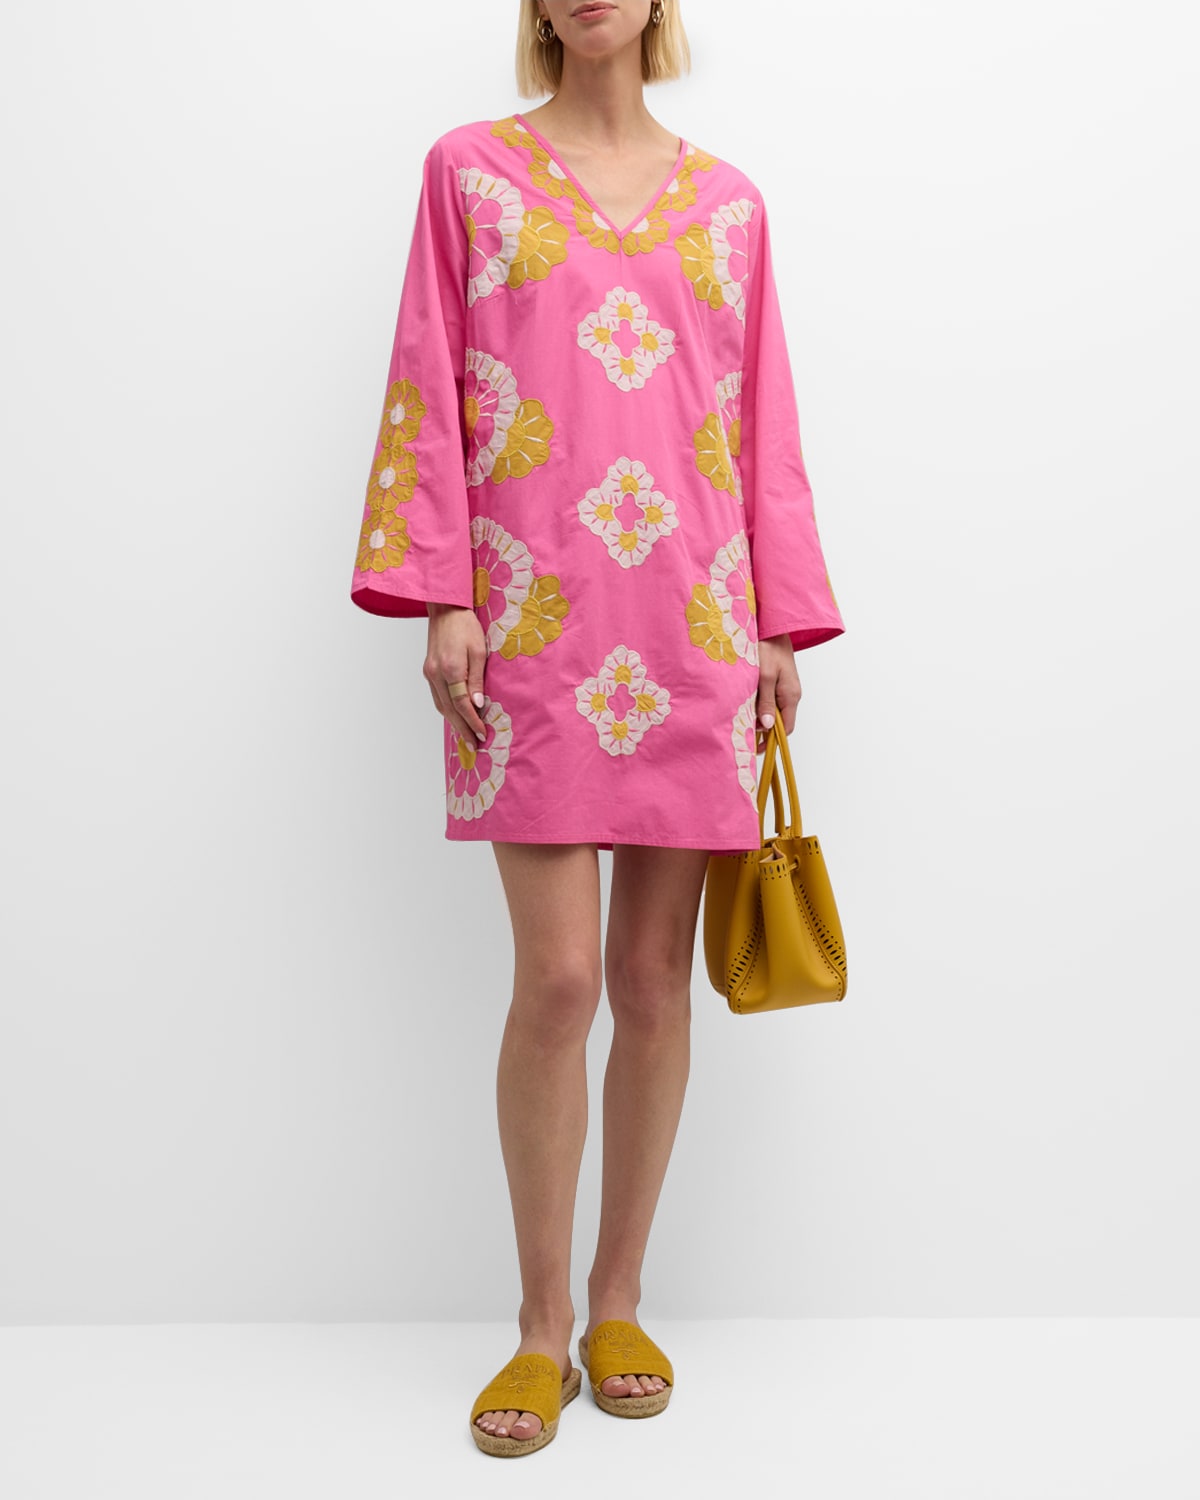 Frances Valentine Goldie Floral Applique Tunic Mini Dress In Pink Multi